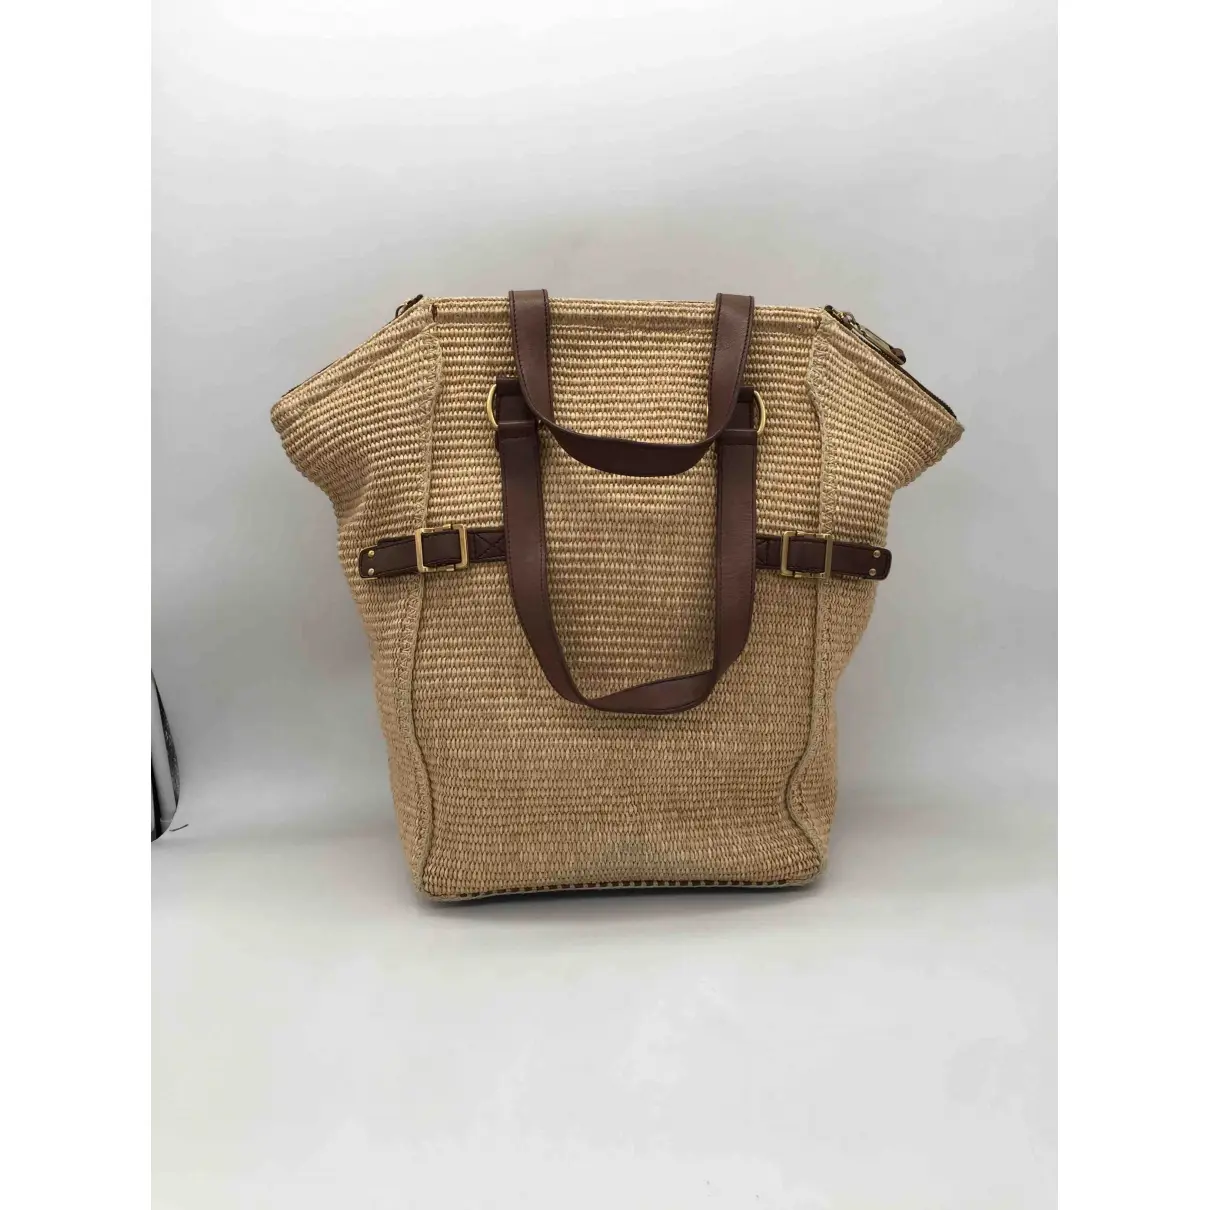 Buy Yves Saint Laurent Downtown handbag online